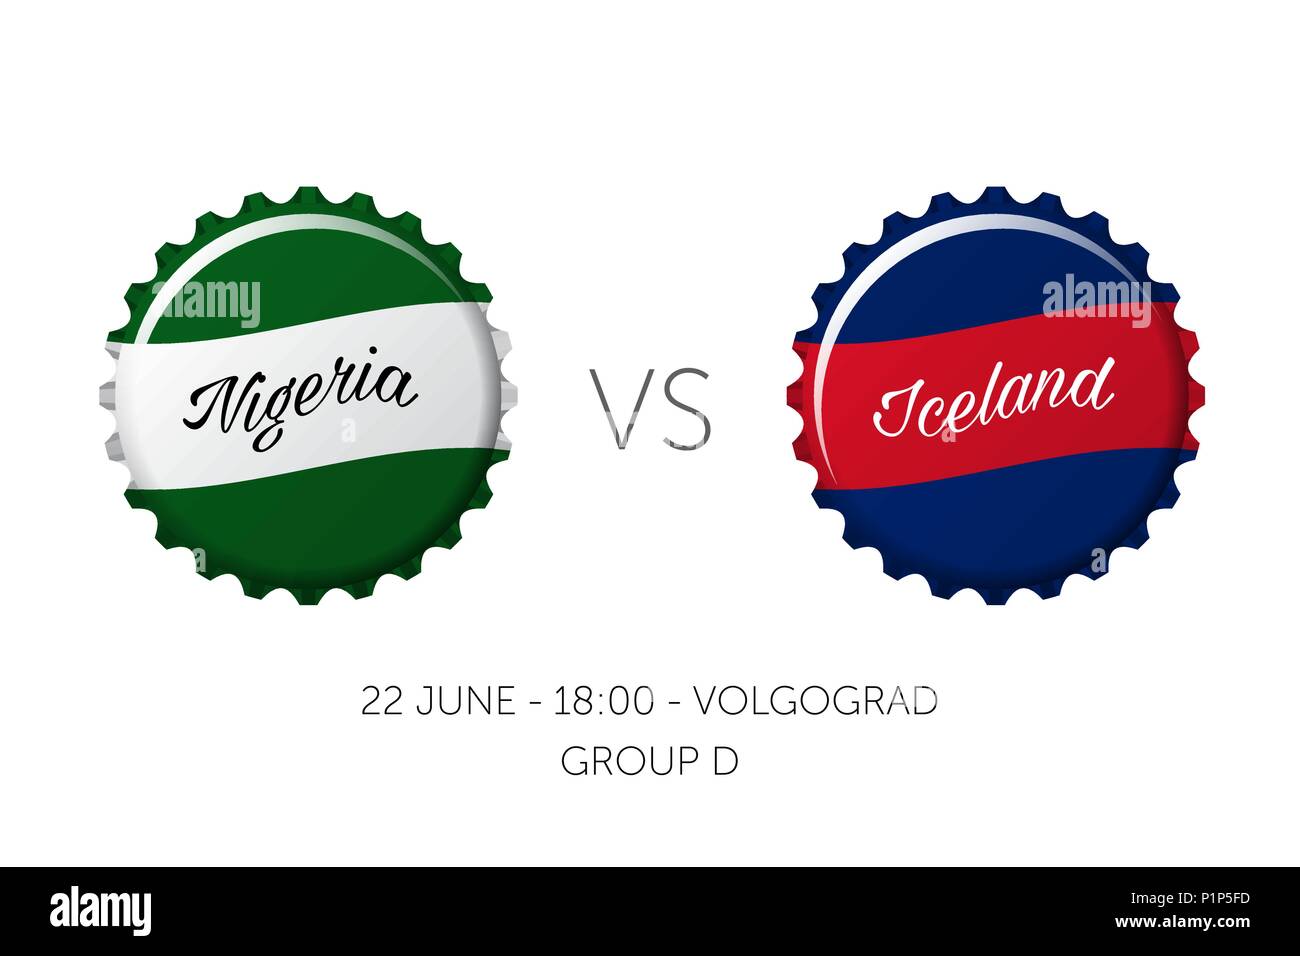 Soccer championship - Nigeria VS Iceland - 22 June Stock Vector